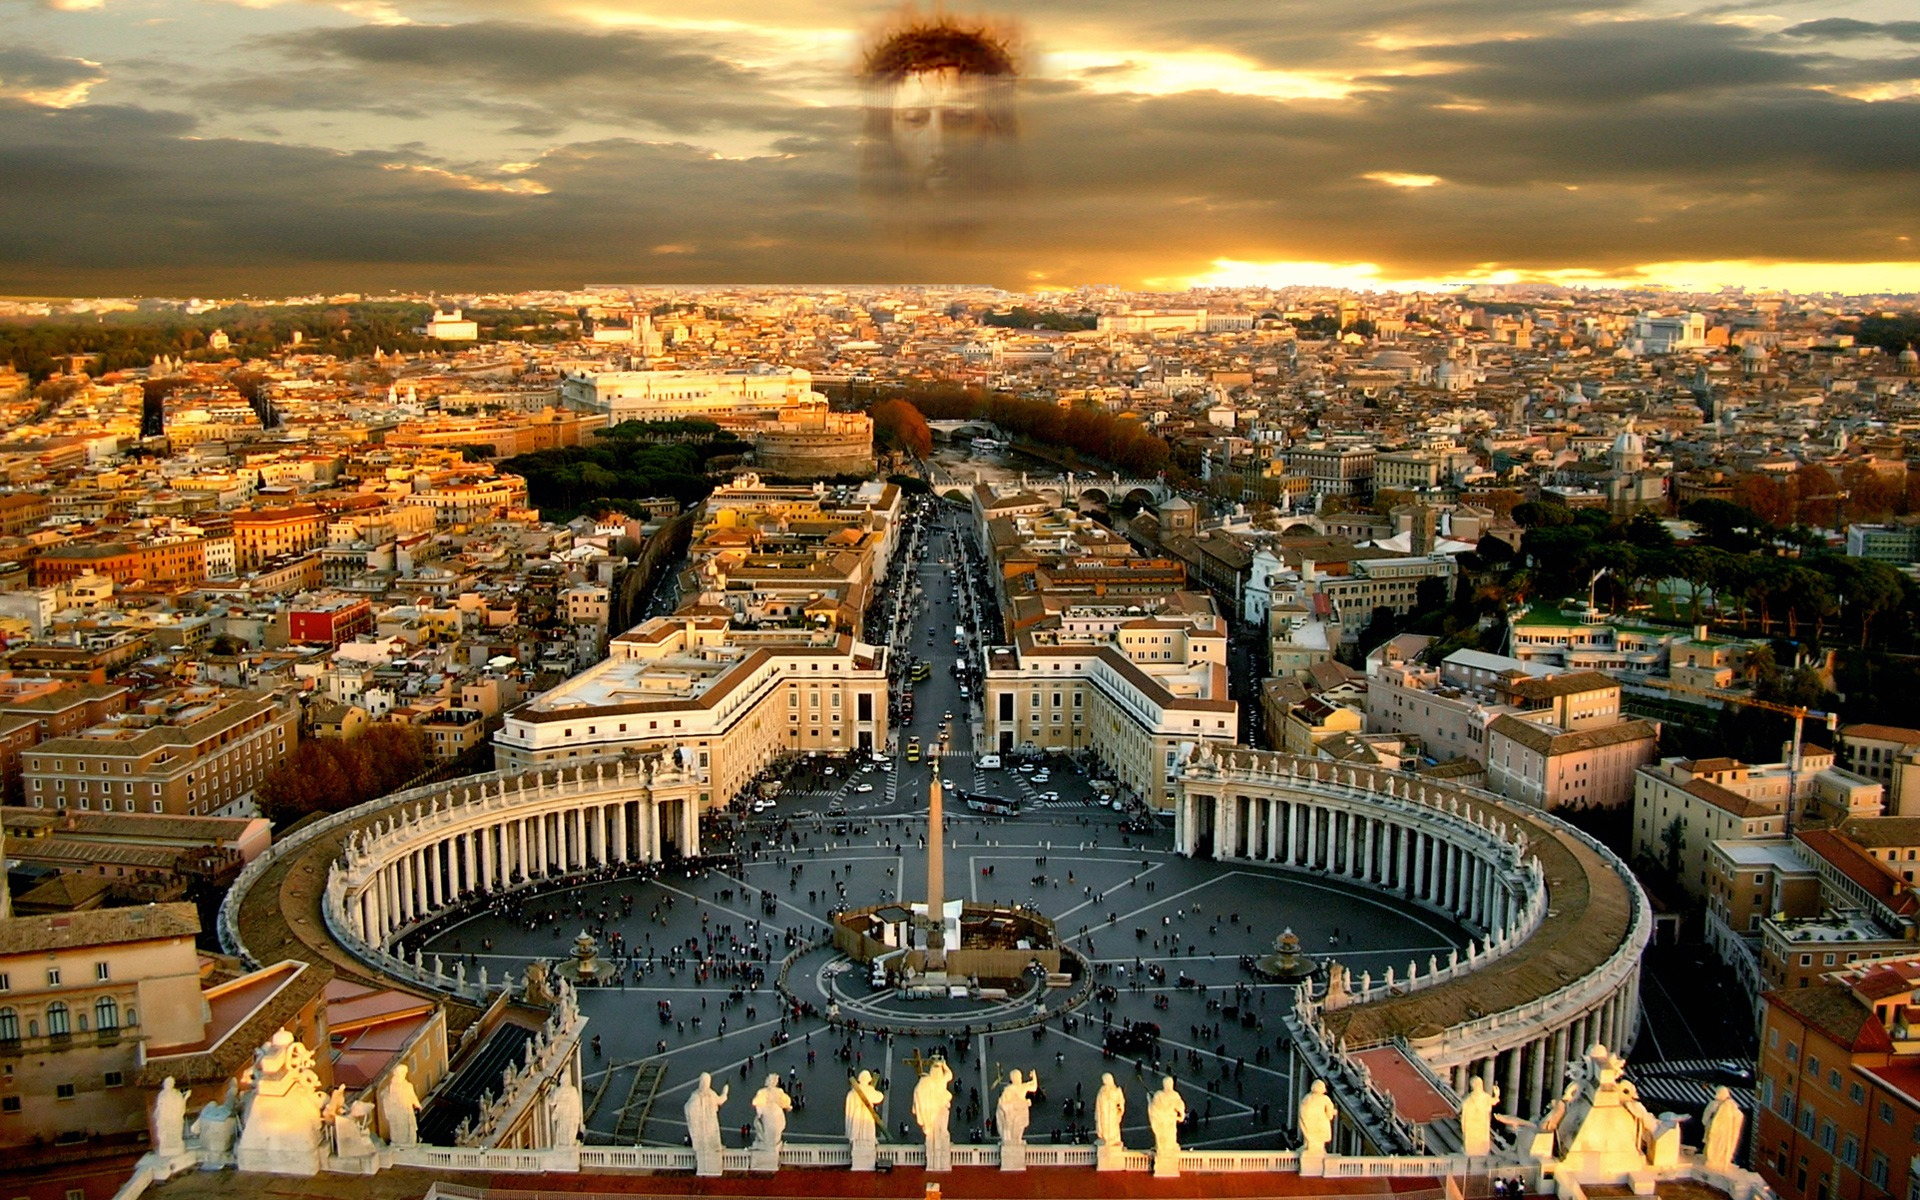 https://rasica.files.wordpress.com/2012/10/face-of-jesus-rome.jpg